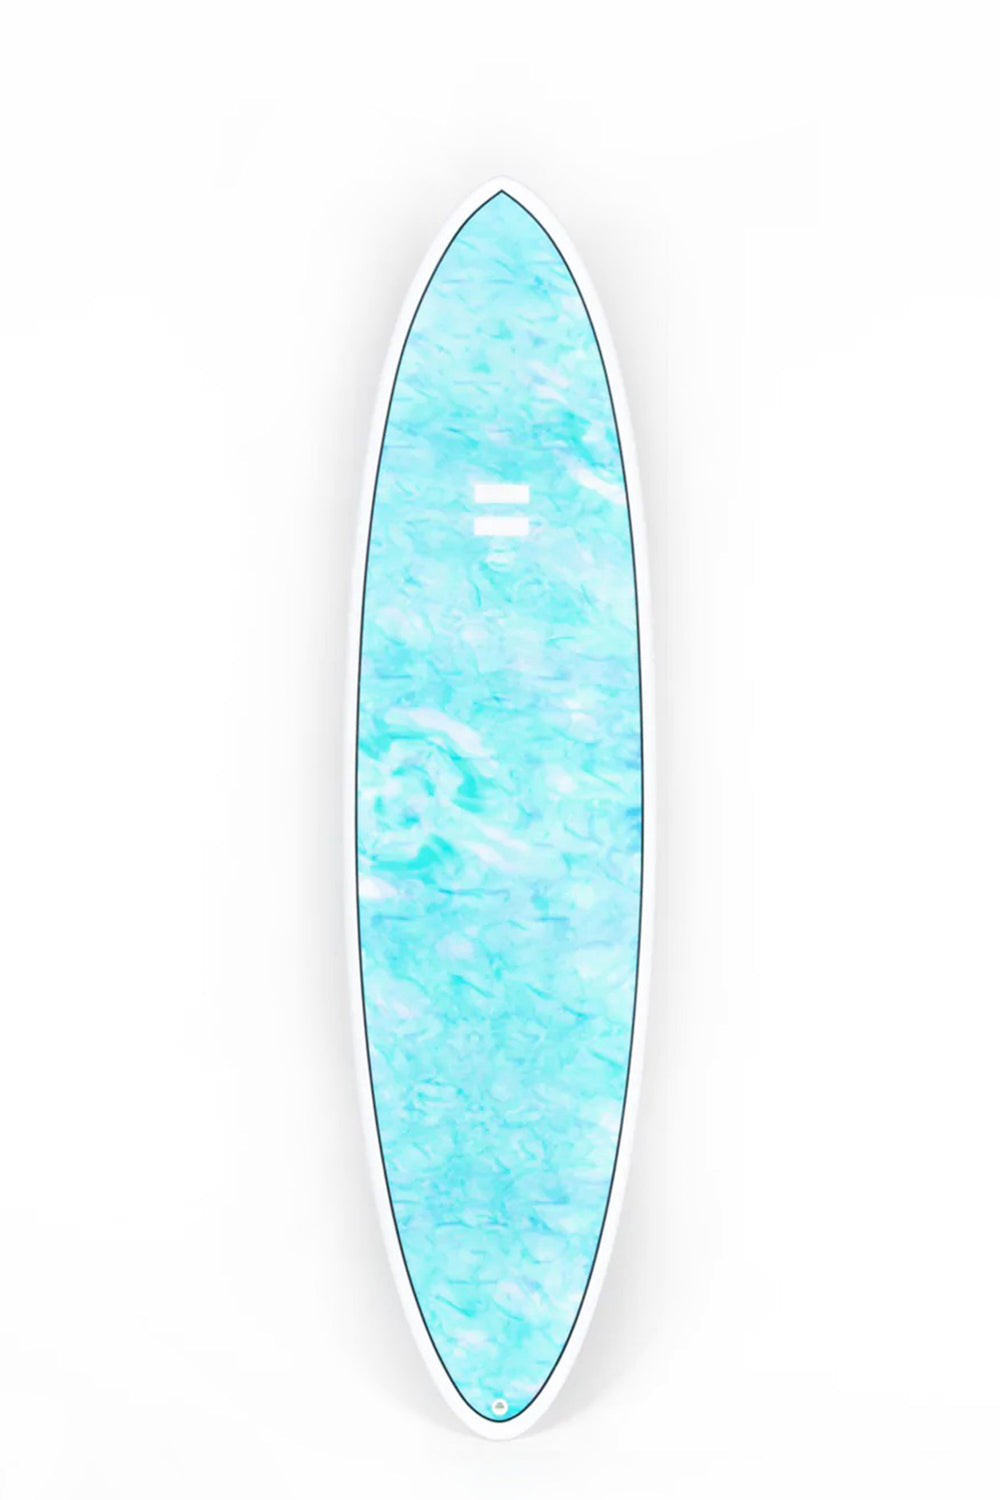 Pukas Surf Shop - Indio Endurance - THE EGG Swirl Effect Blue Mint - 7´10